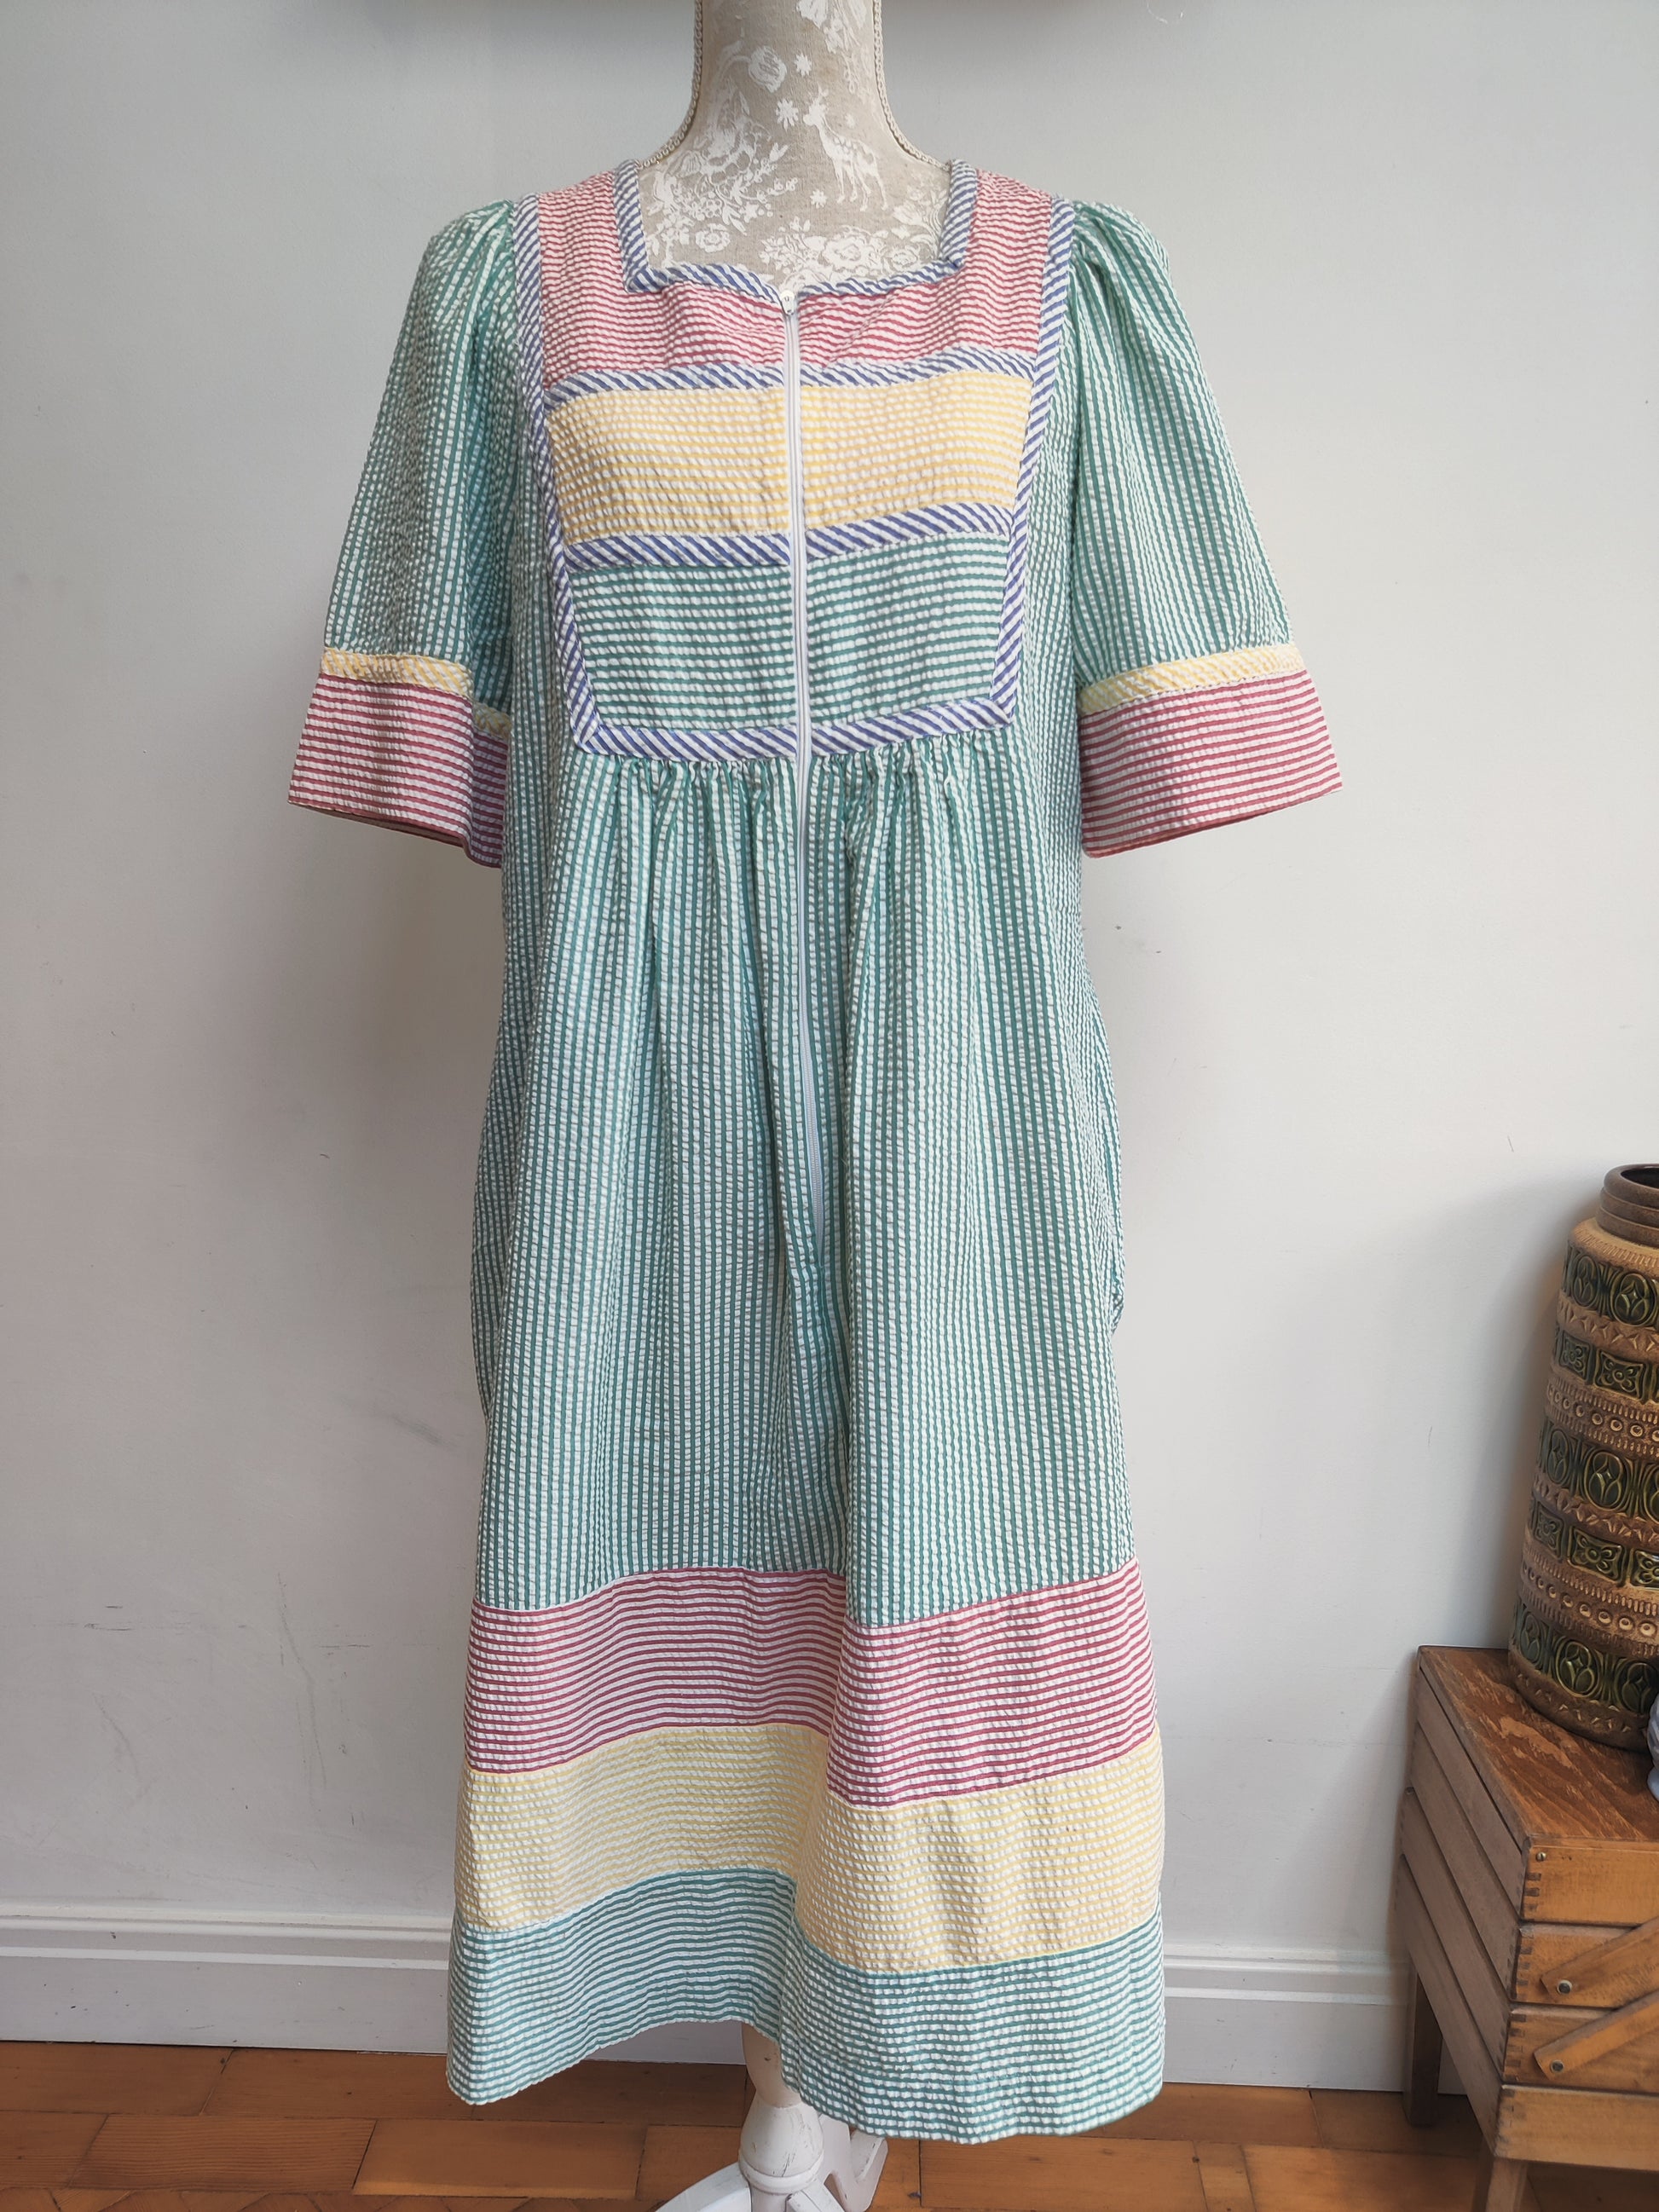 Vintage Seersucker Saybury dress size 8-14